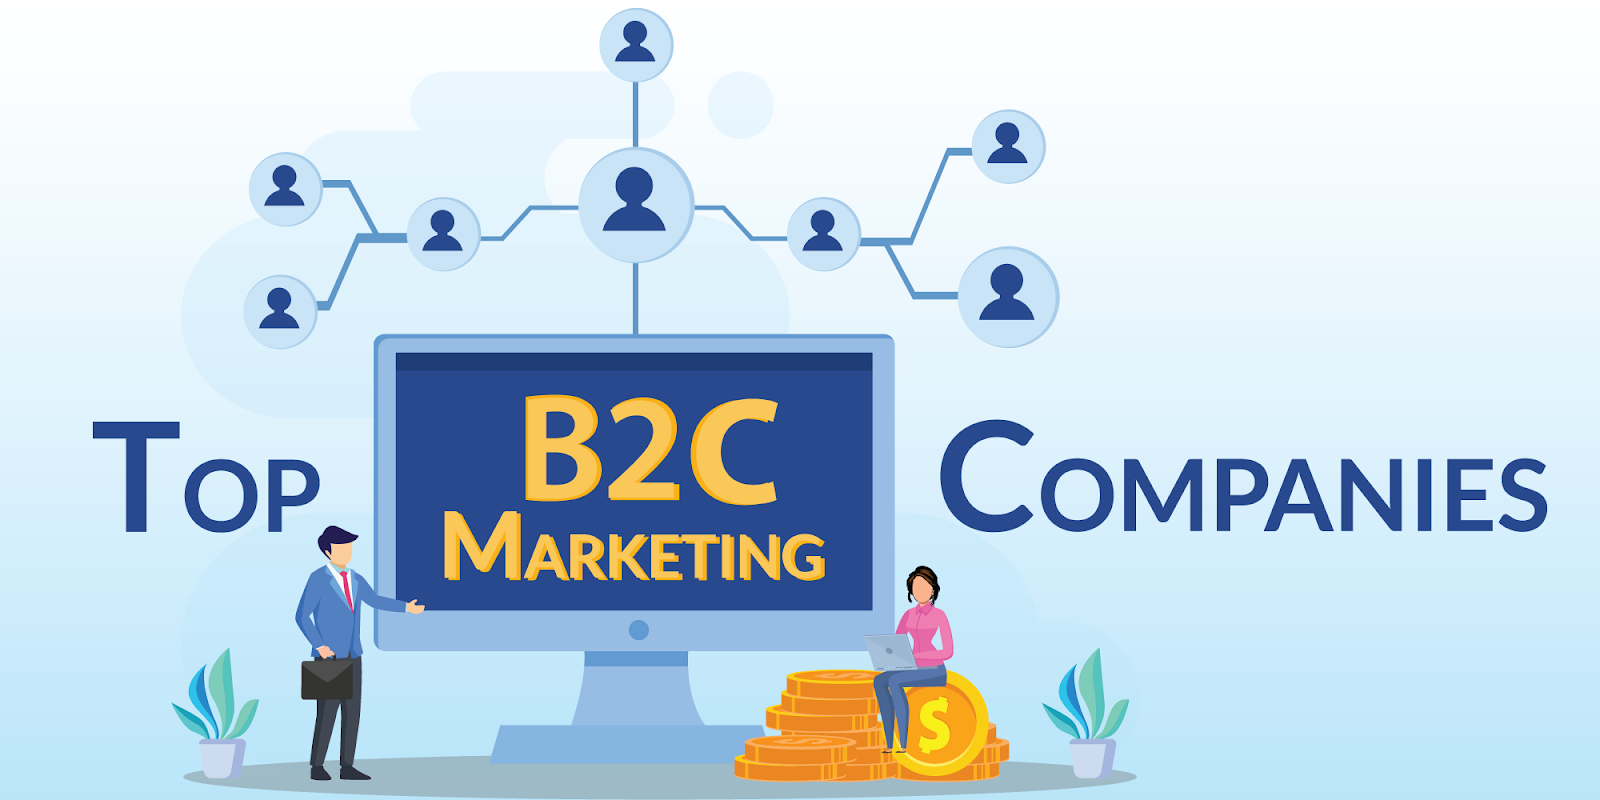 Top B2C Marketing Companies by The Digital Edge